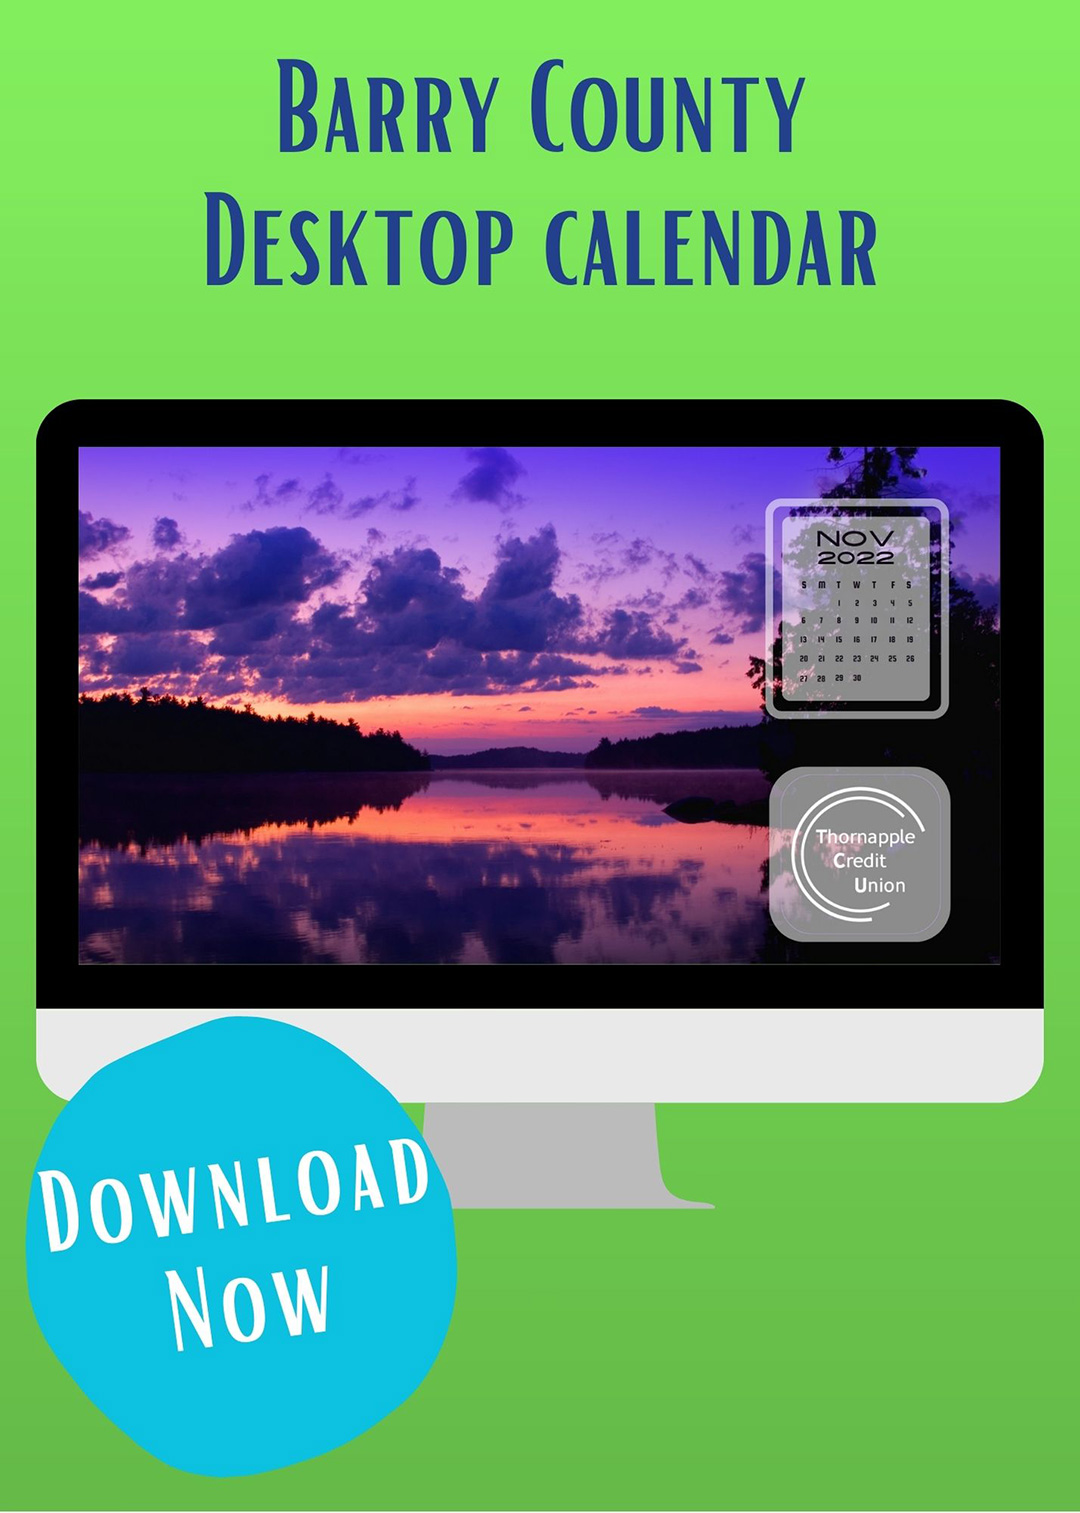 Barry County Desktop Calendars